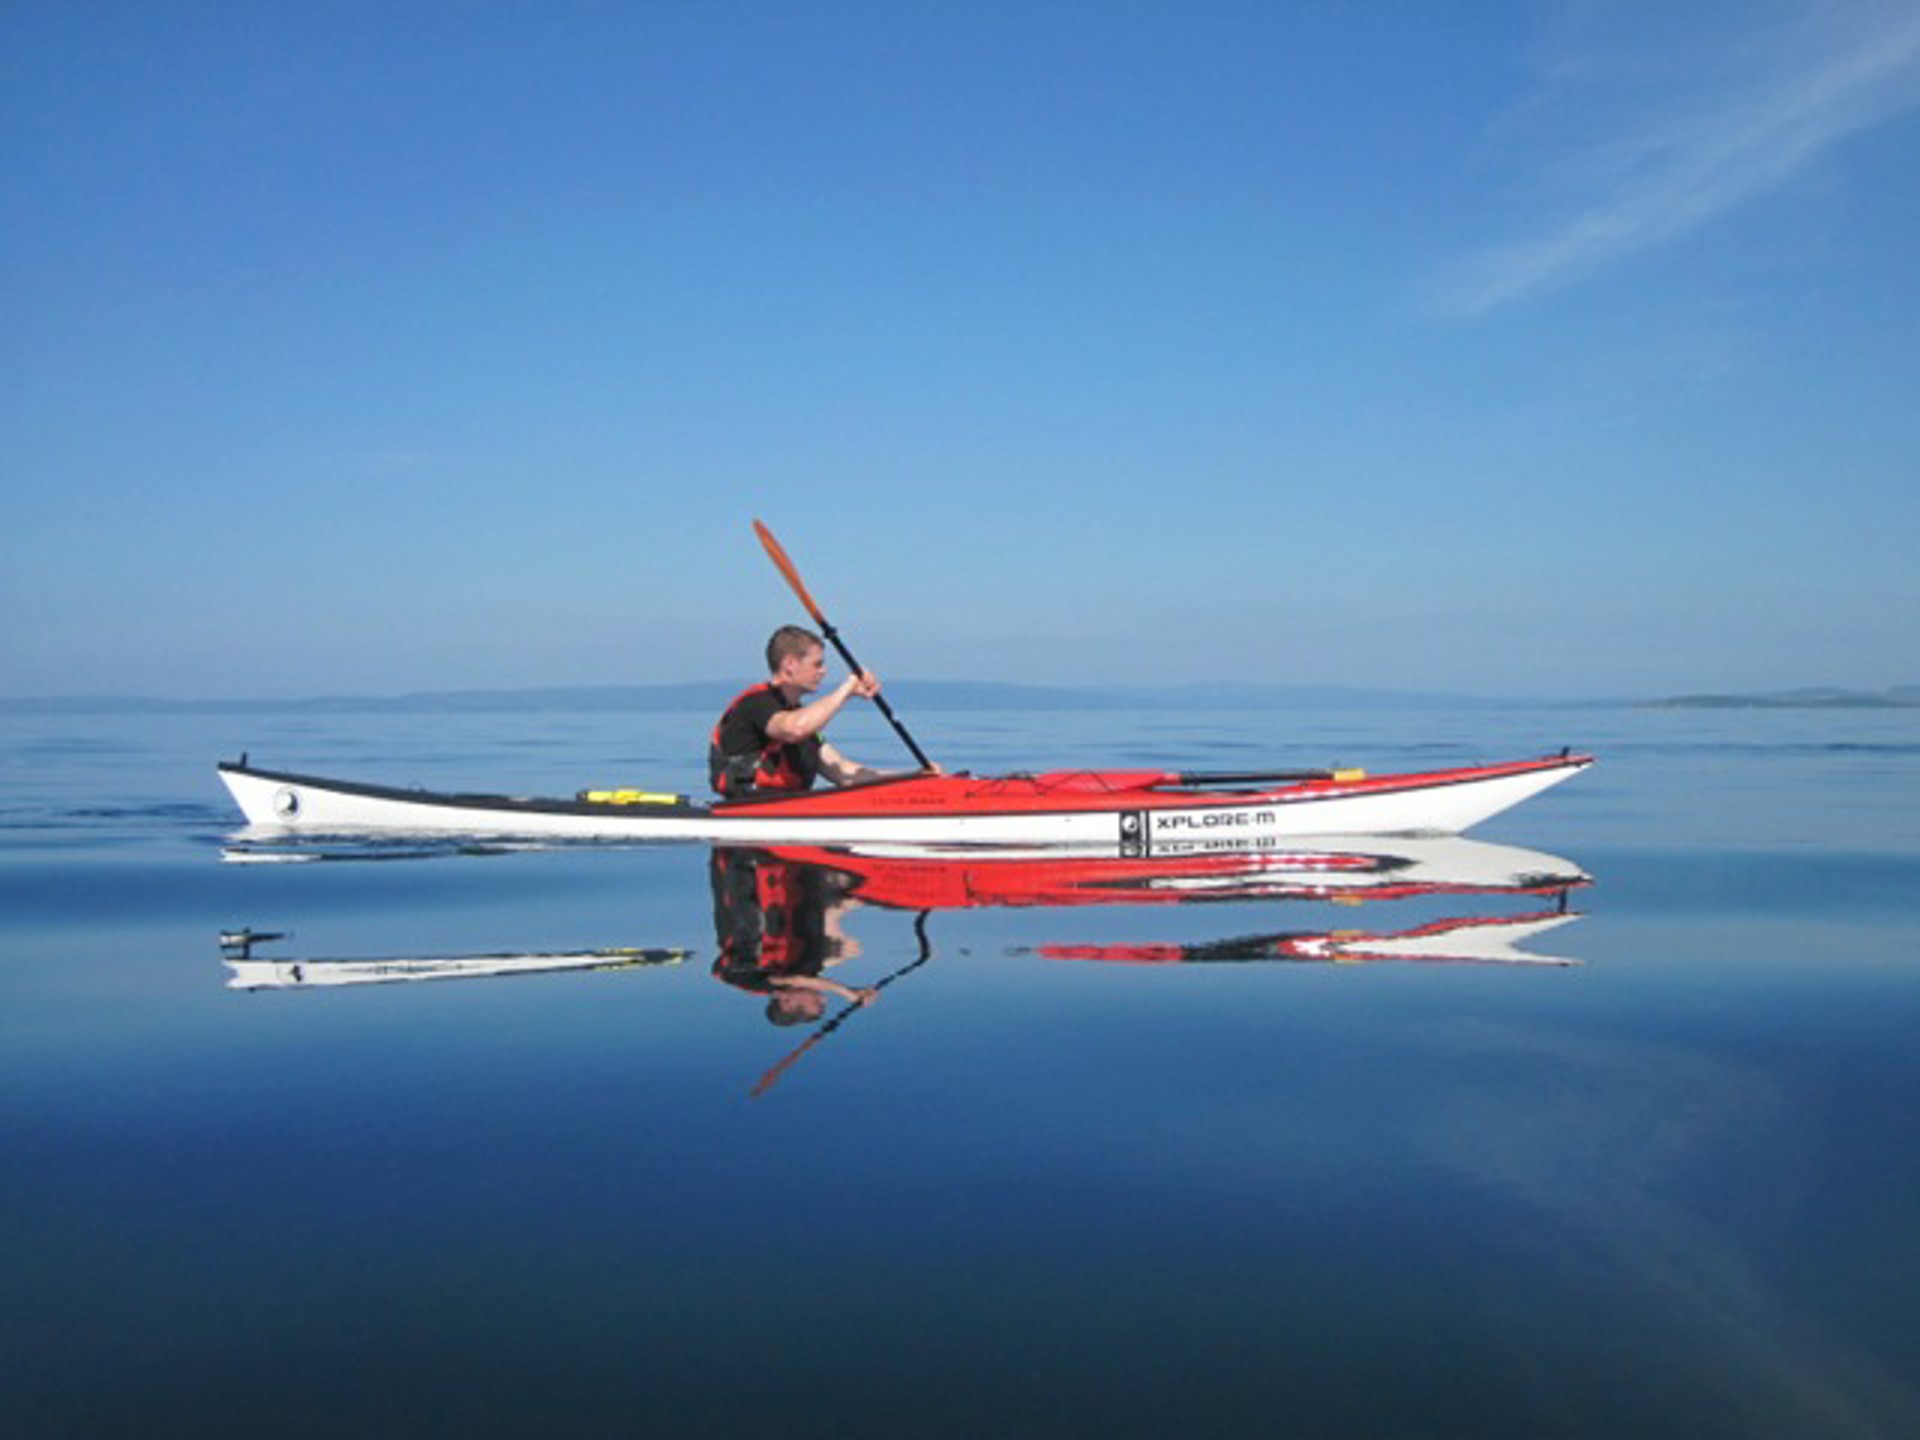 Background image - Kayaker